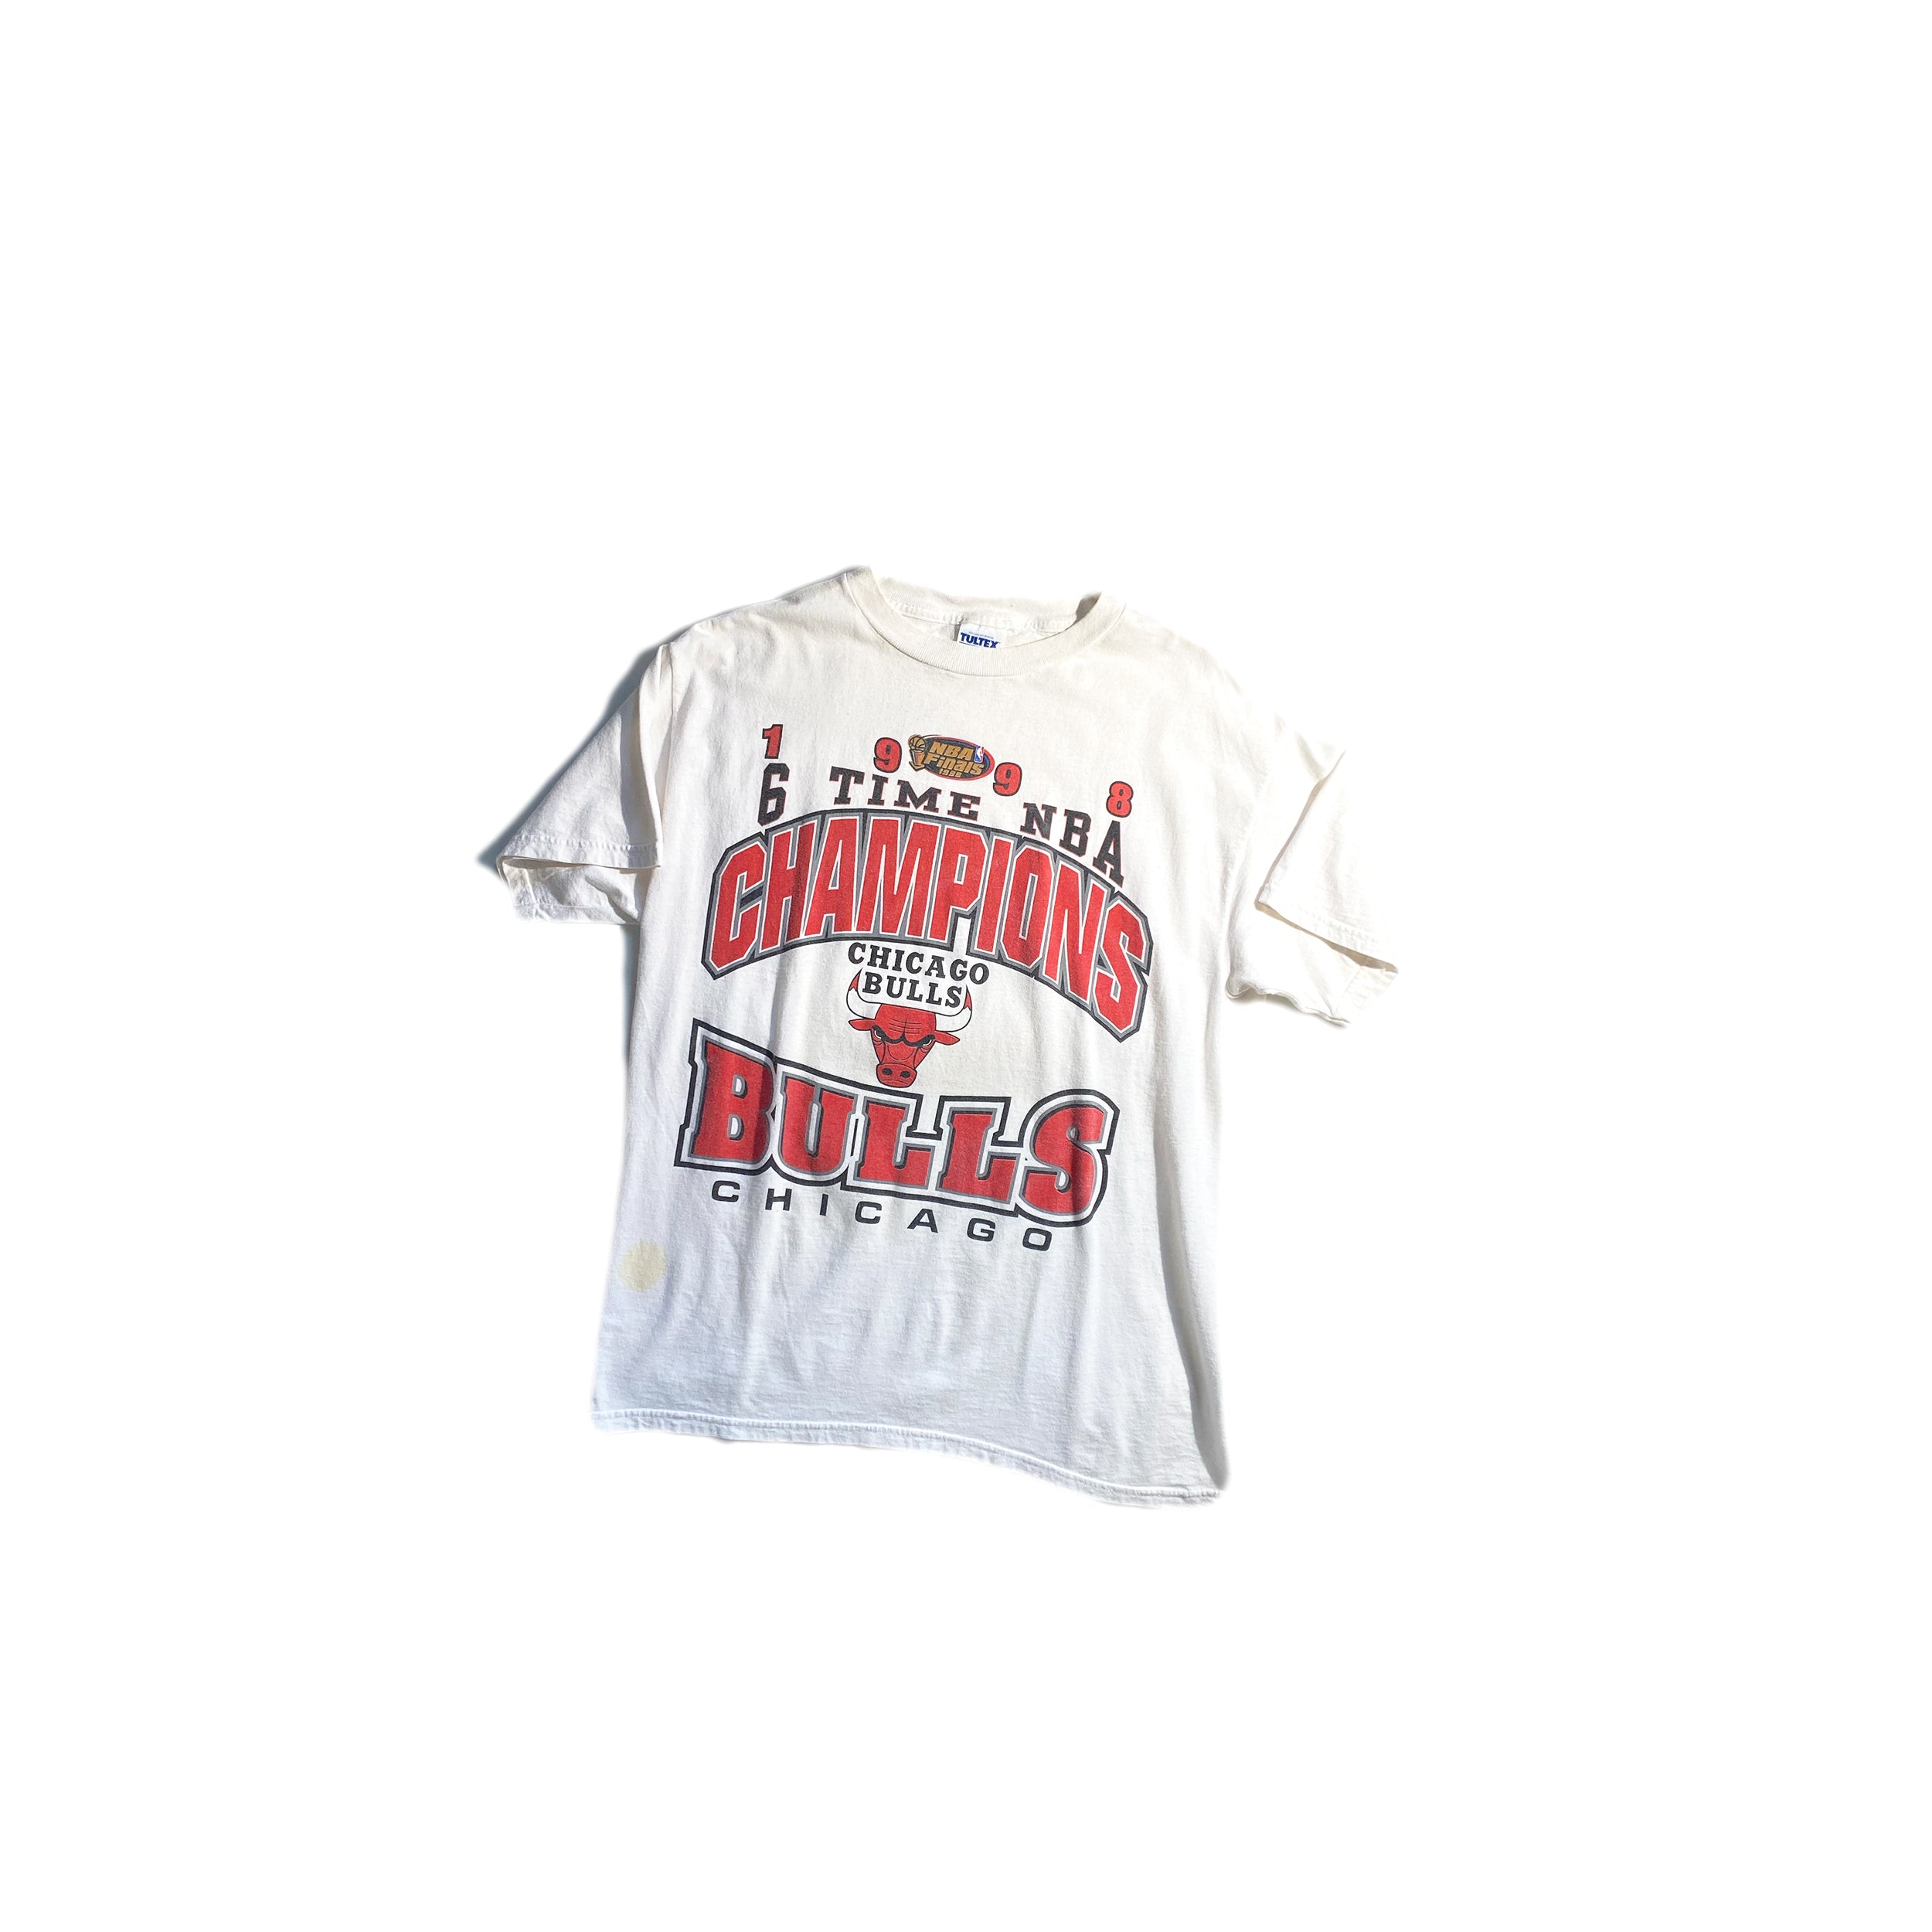 chicago bulls 1993 championship shirt